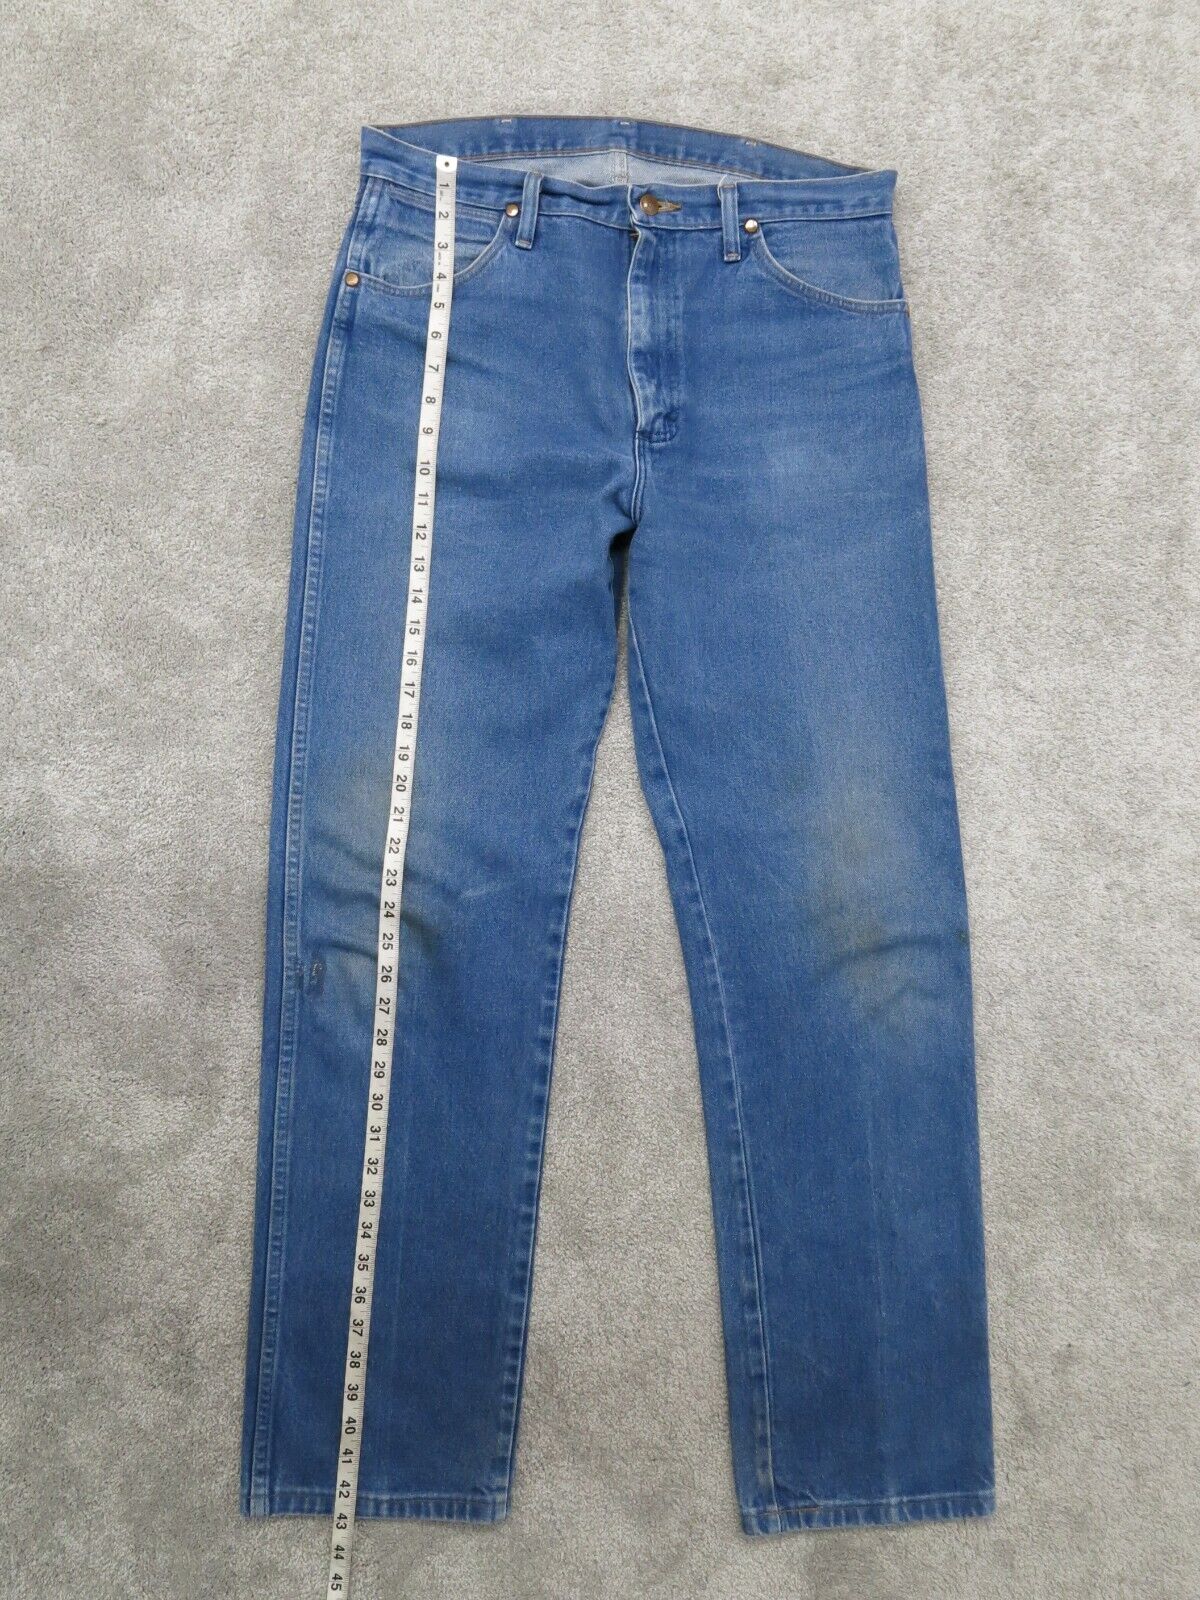 Wrangler Mens Straight Leg Jeans Denim Stretch Pockets Blue Size W34/L34